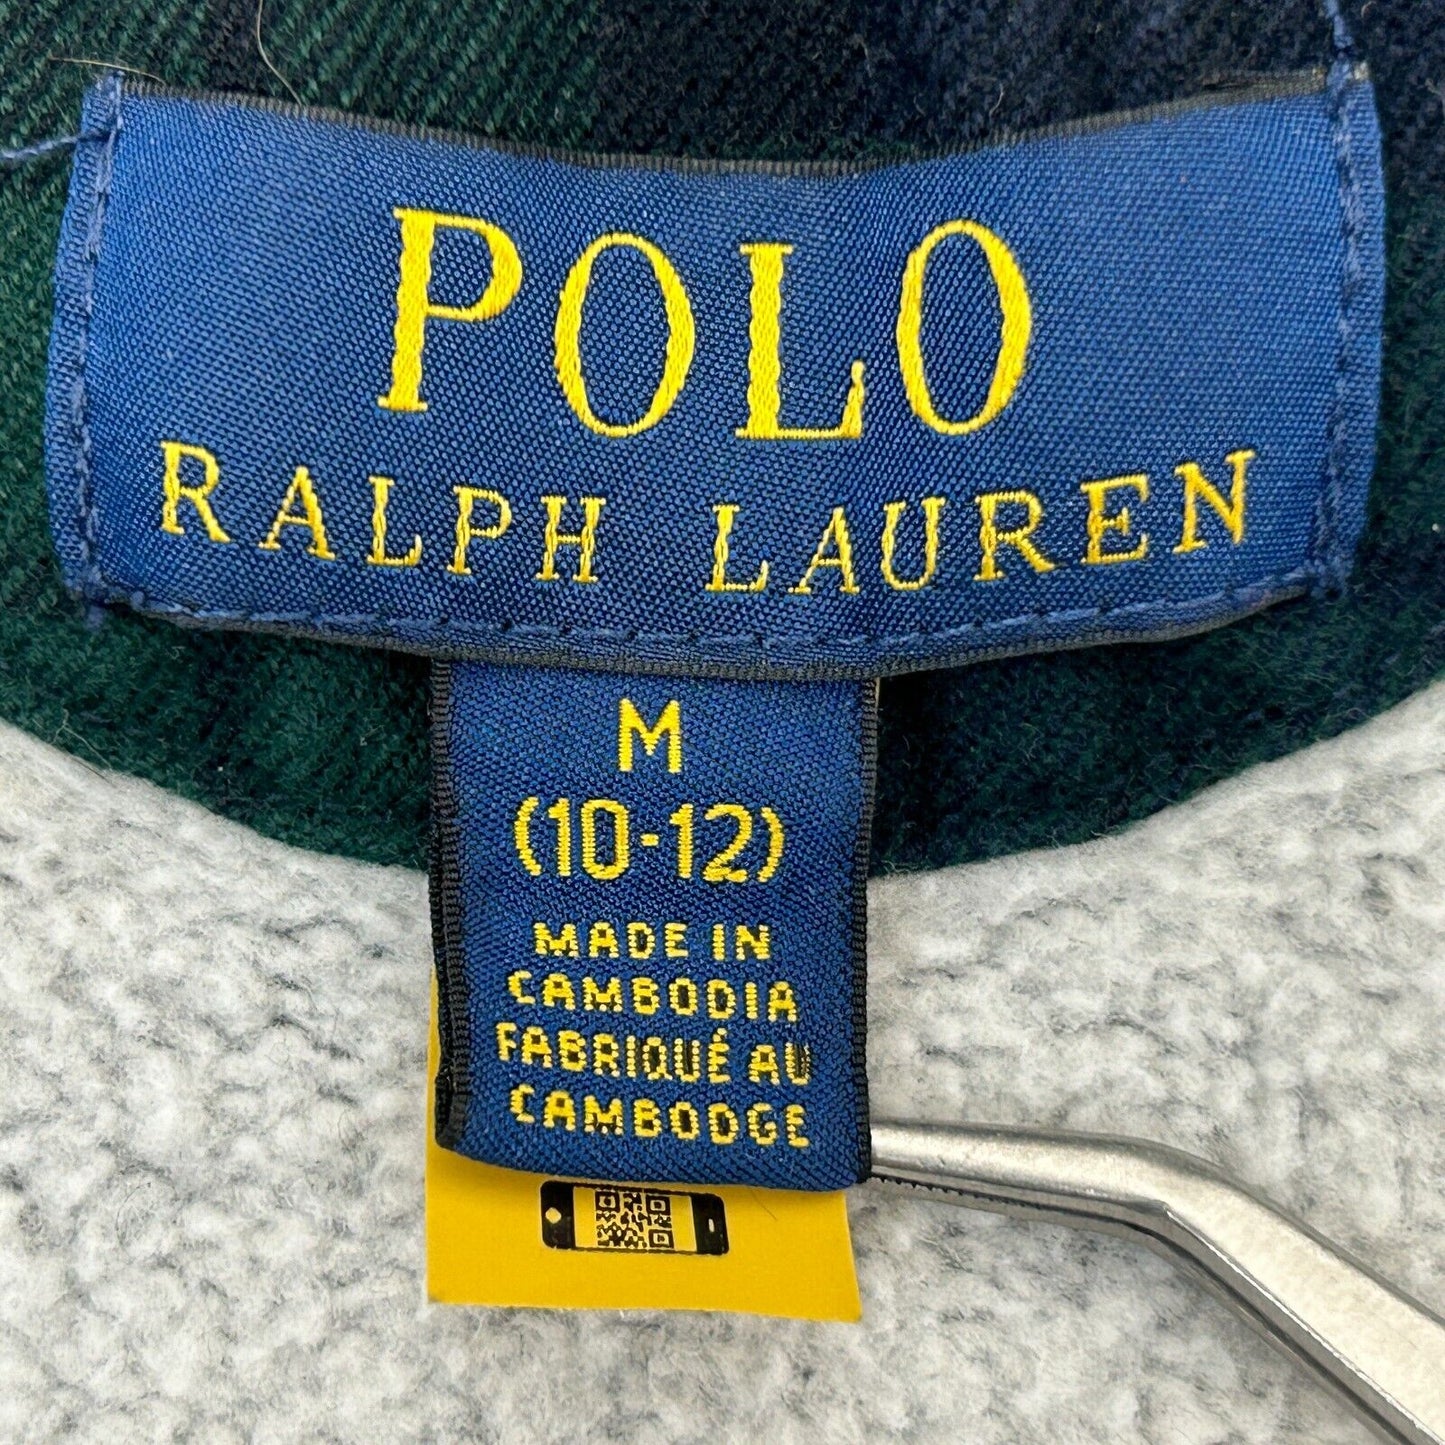 Polo Ralph Lauren Sudadera con capucha para jóvenes, color gris oscuro, talla mediana 10-12